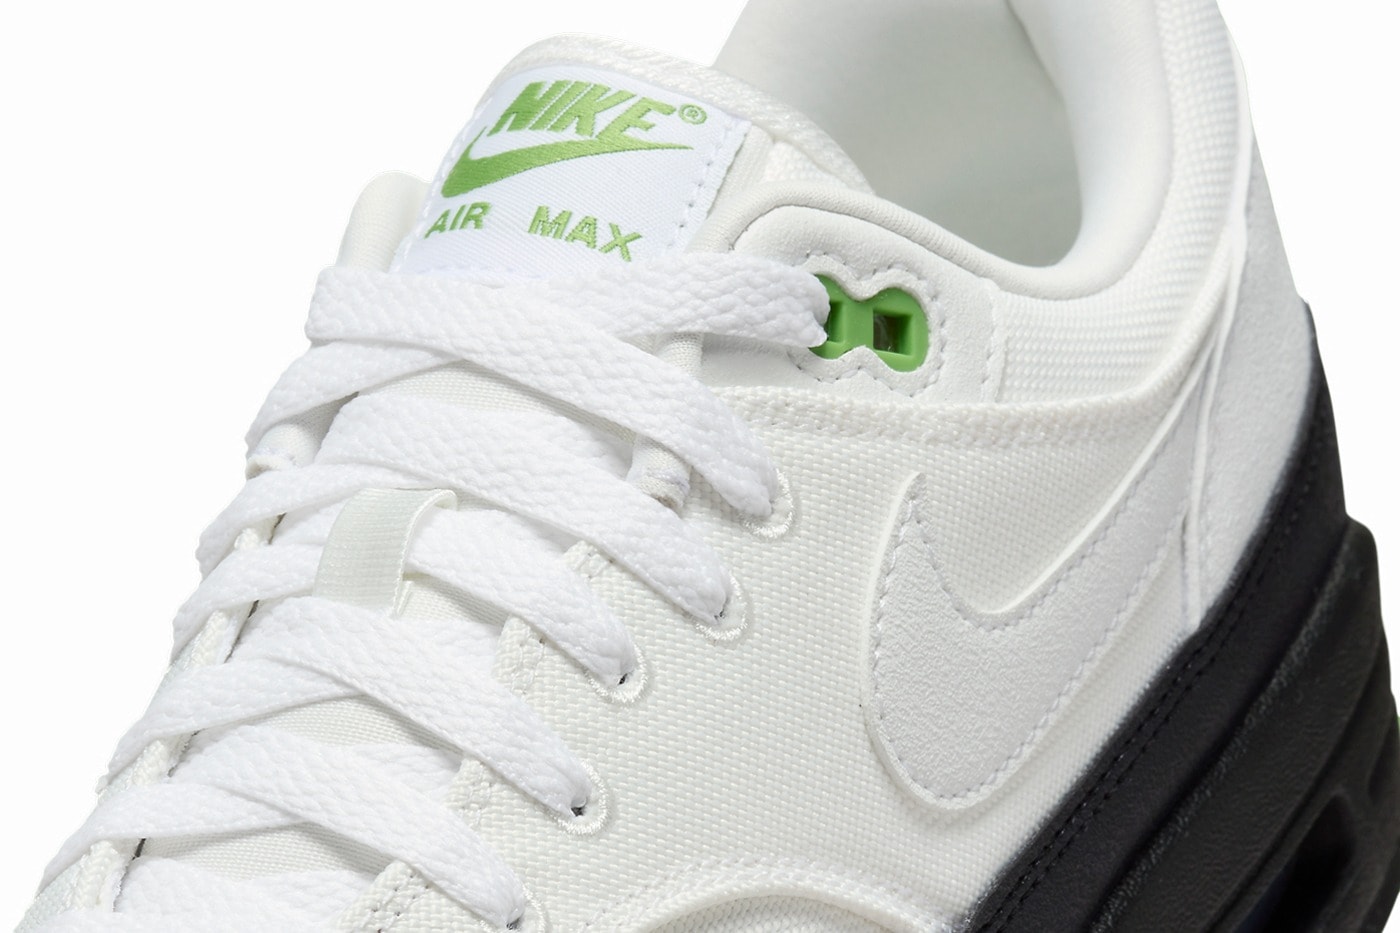 近賞 Nike Air Max 1 全新配色「White/Black/Chlorophyll」官方圖輯